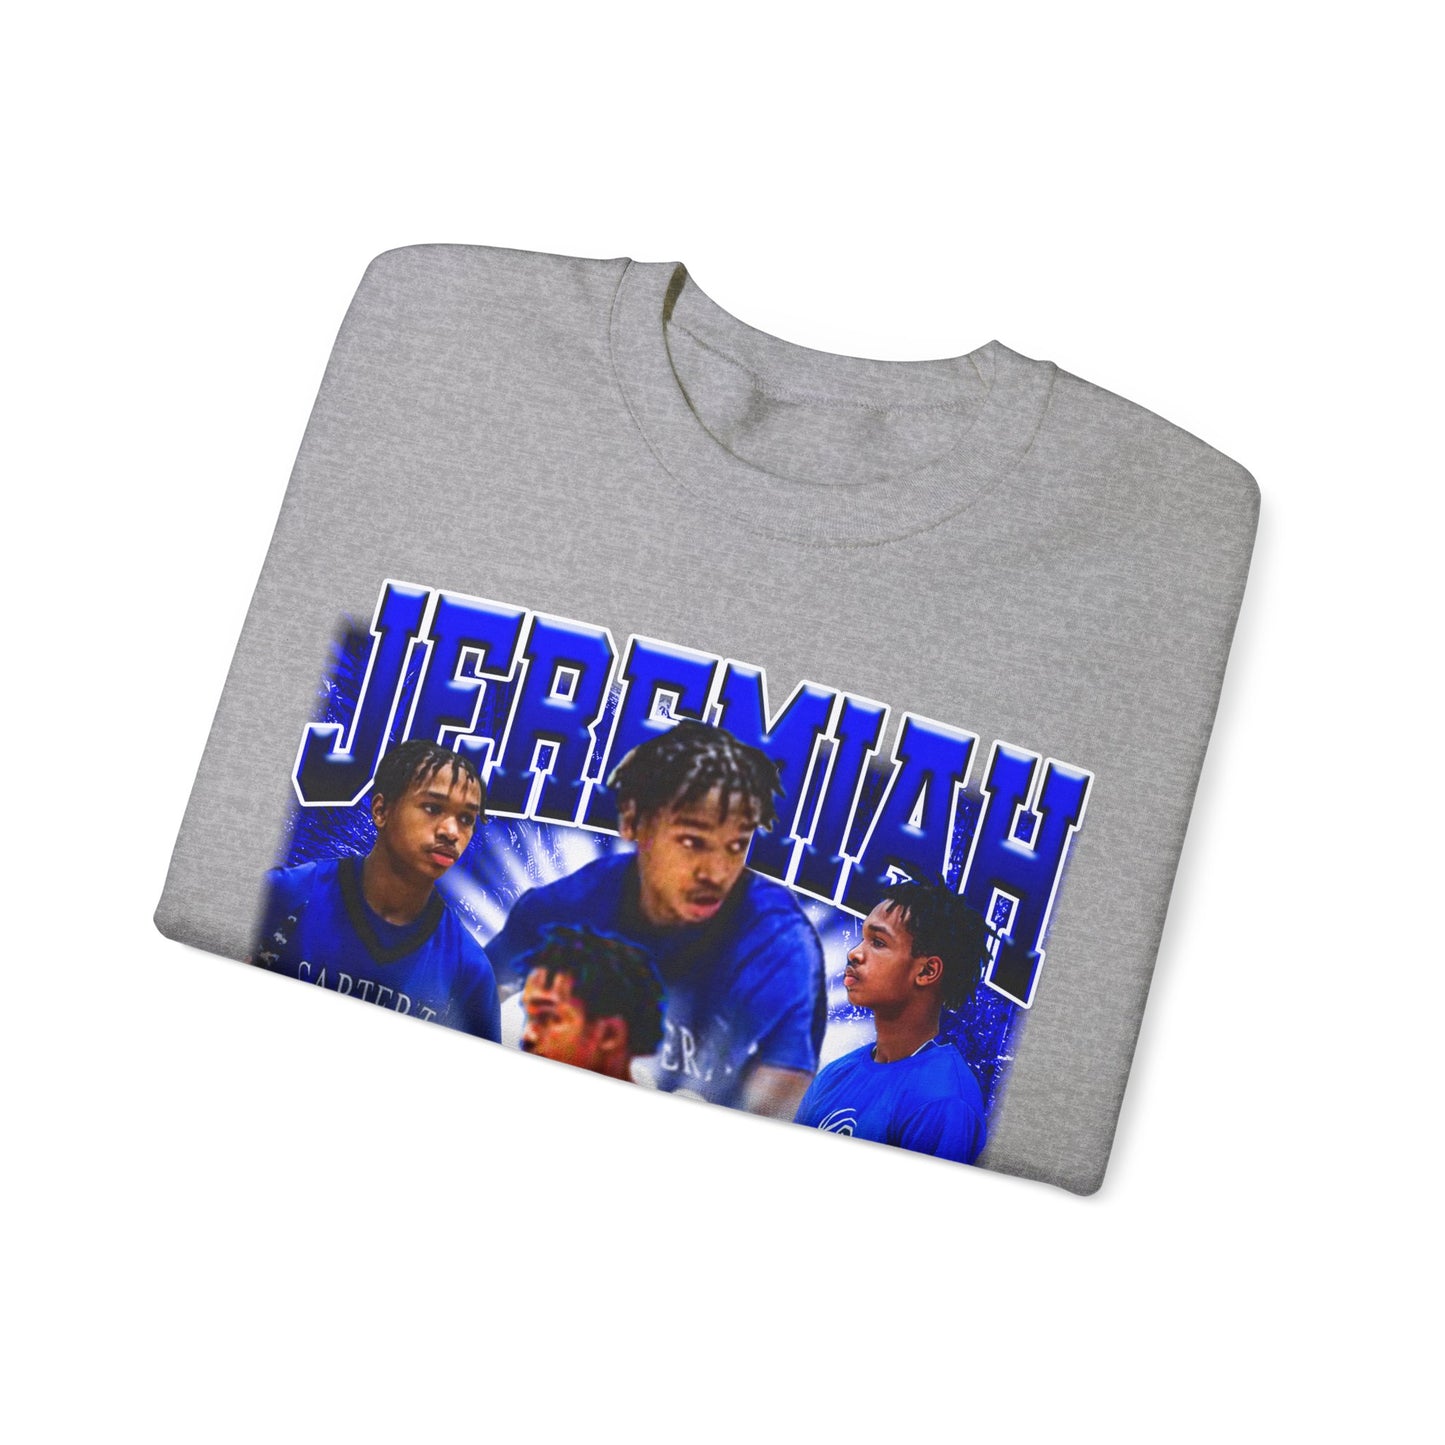 Jeremiah Arrington Crewneck Sweatshirt